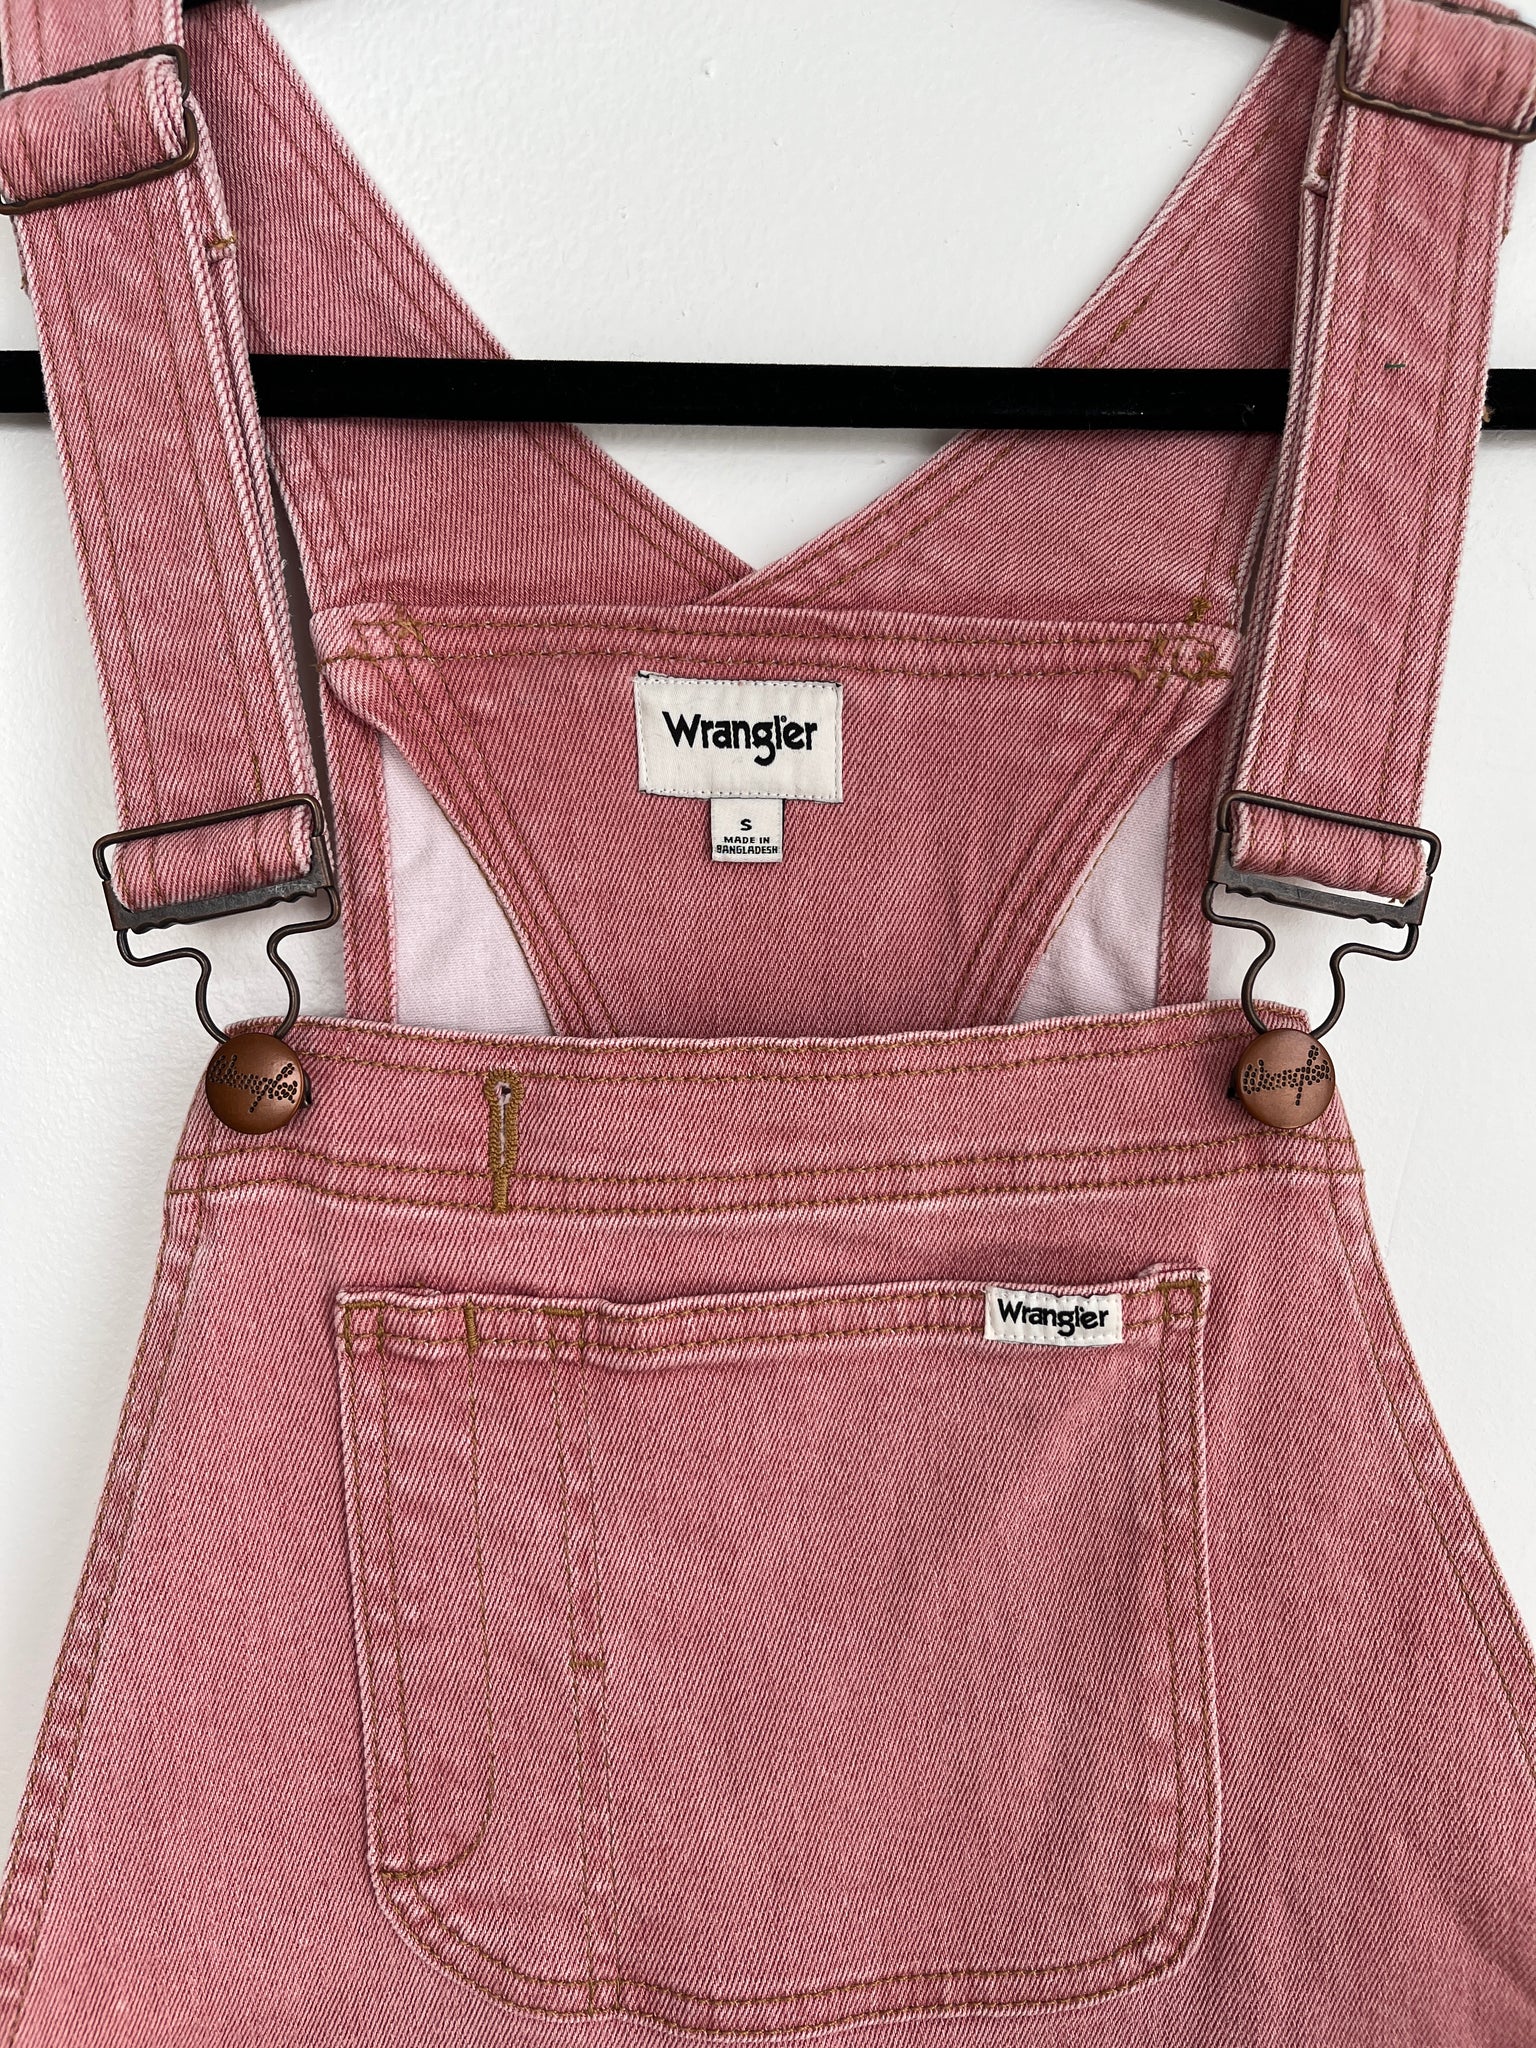 1990s DRESS-Wrangler pink overall mini